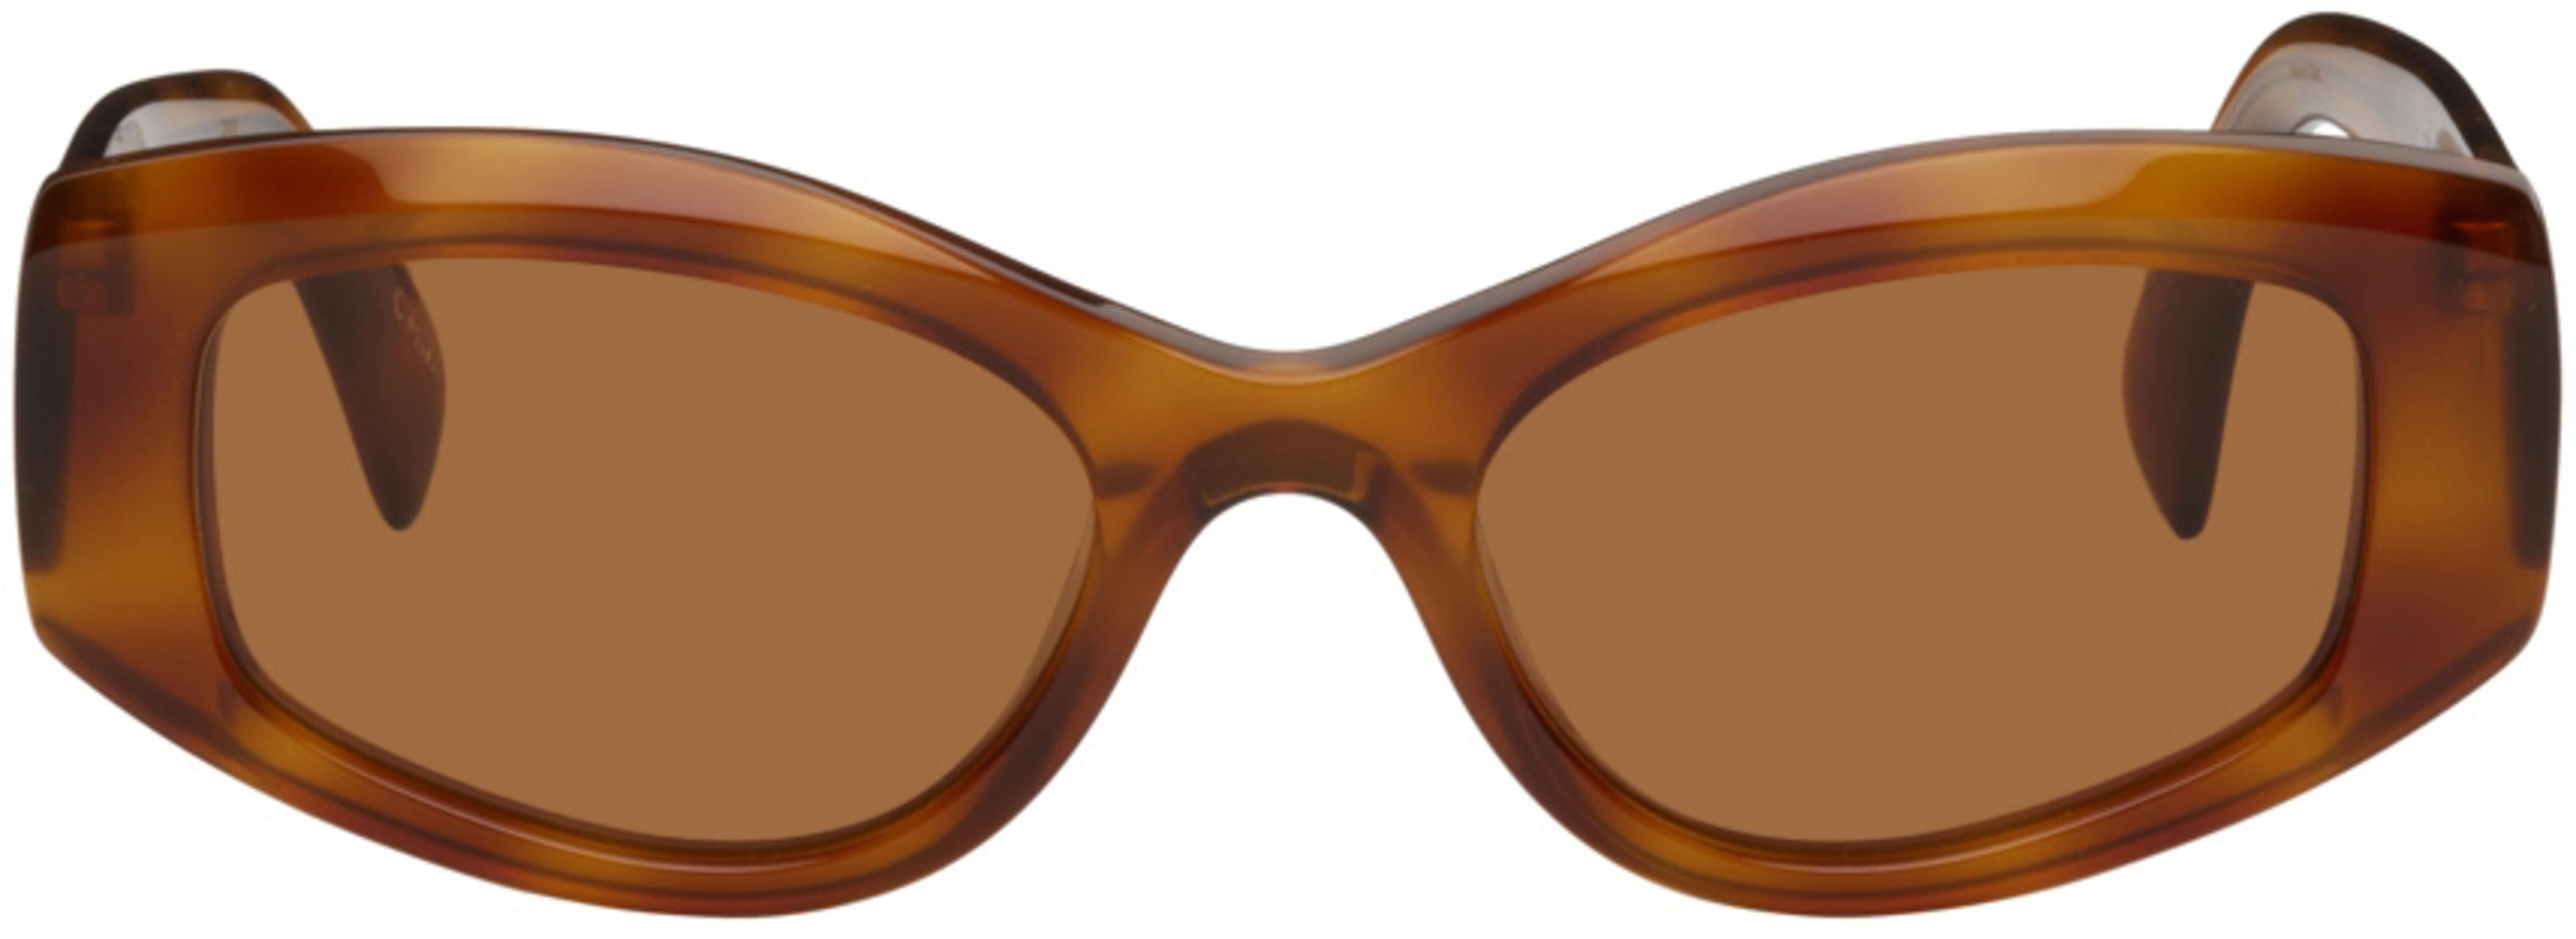 Orange Lab 2nd Sunglasses by CHIMI